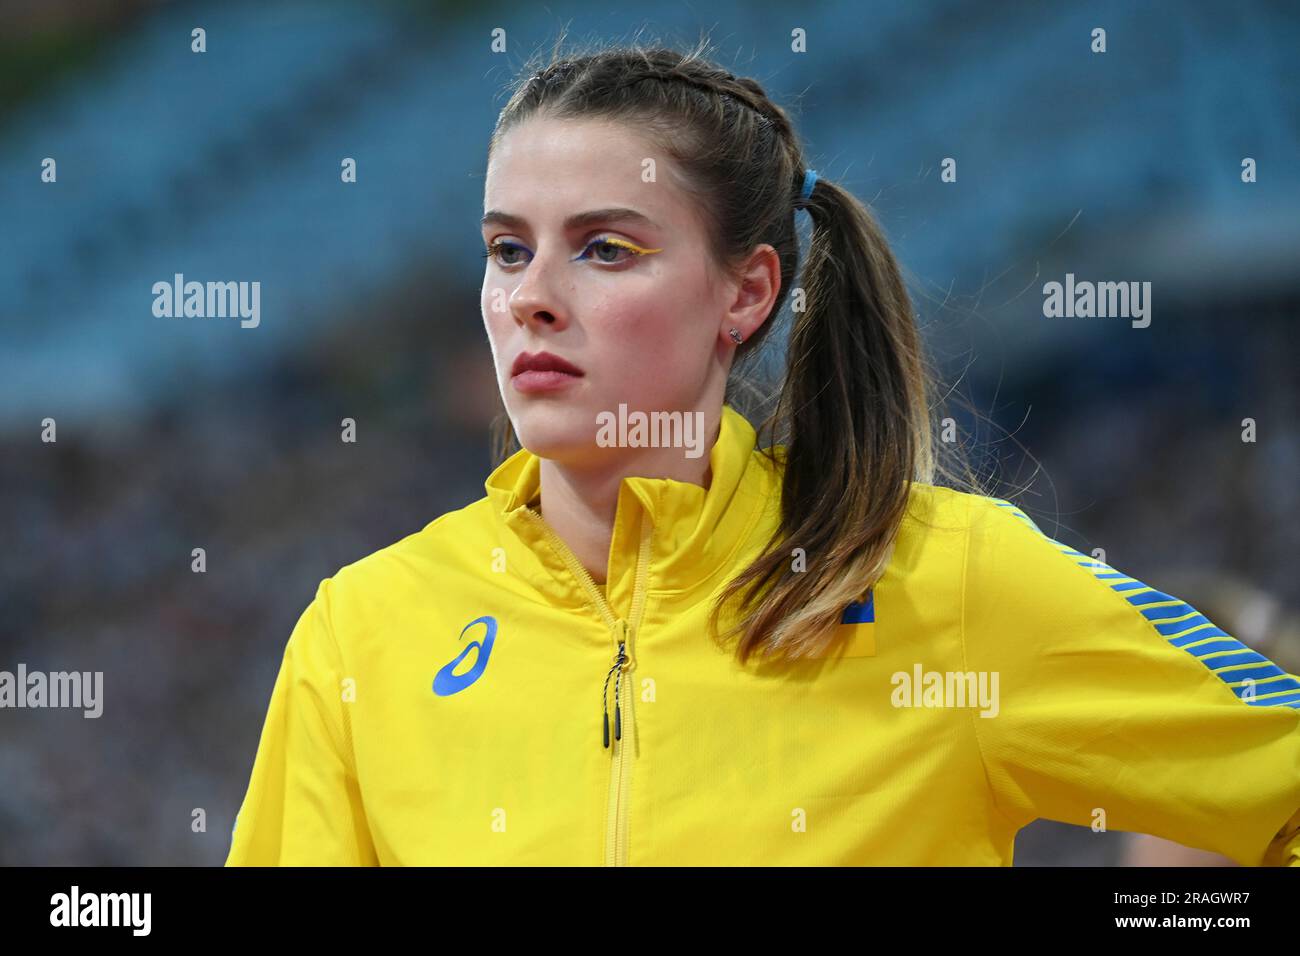 Yaroslava Mahuchikh (Ukraine). High-Jump-Frauen. Europameisterschaft München 2022 Stockfoto